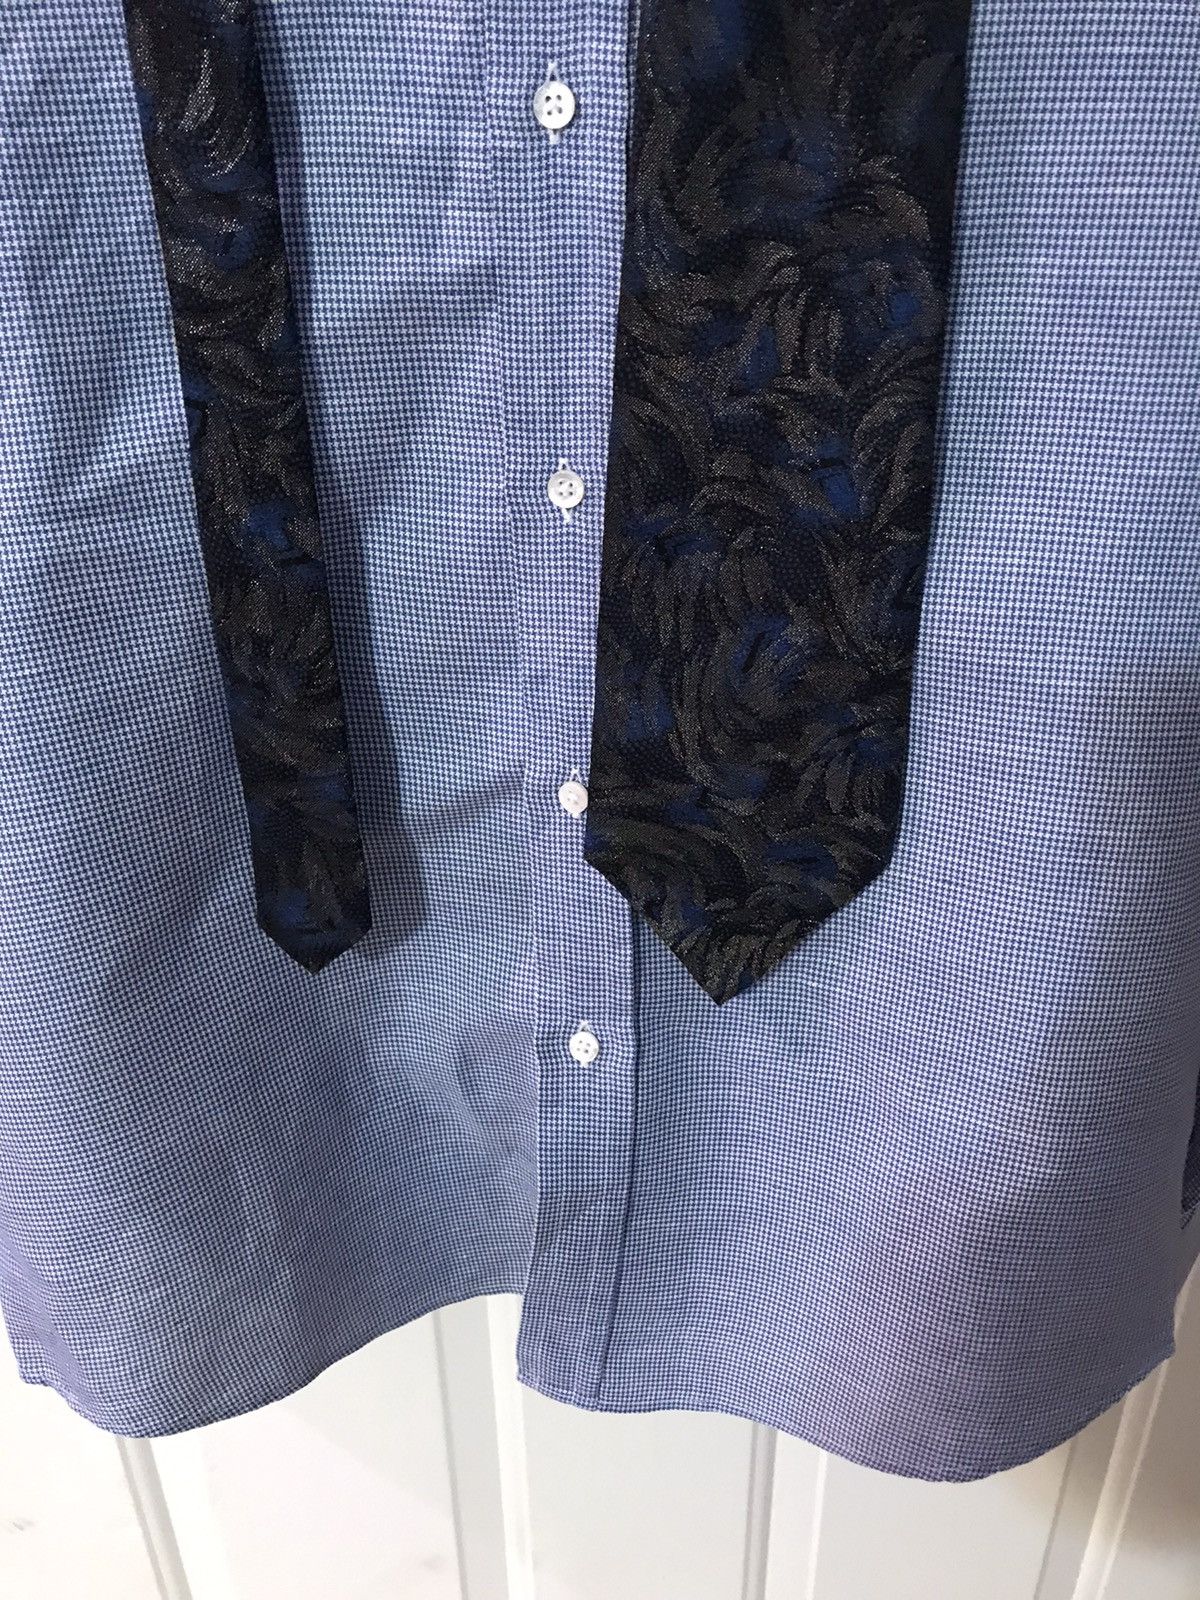 Fendi Floral shimmer silk tie (Royal,Grey, Black) Size ONE SIZE - 3 Thumbnail